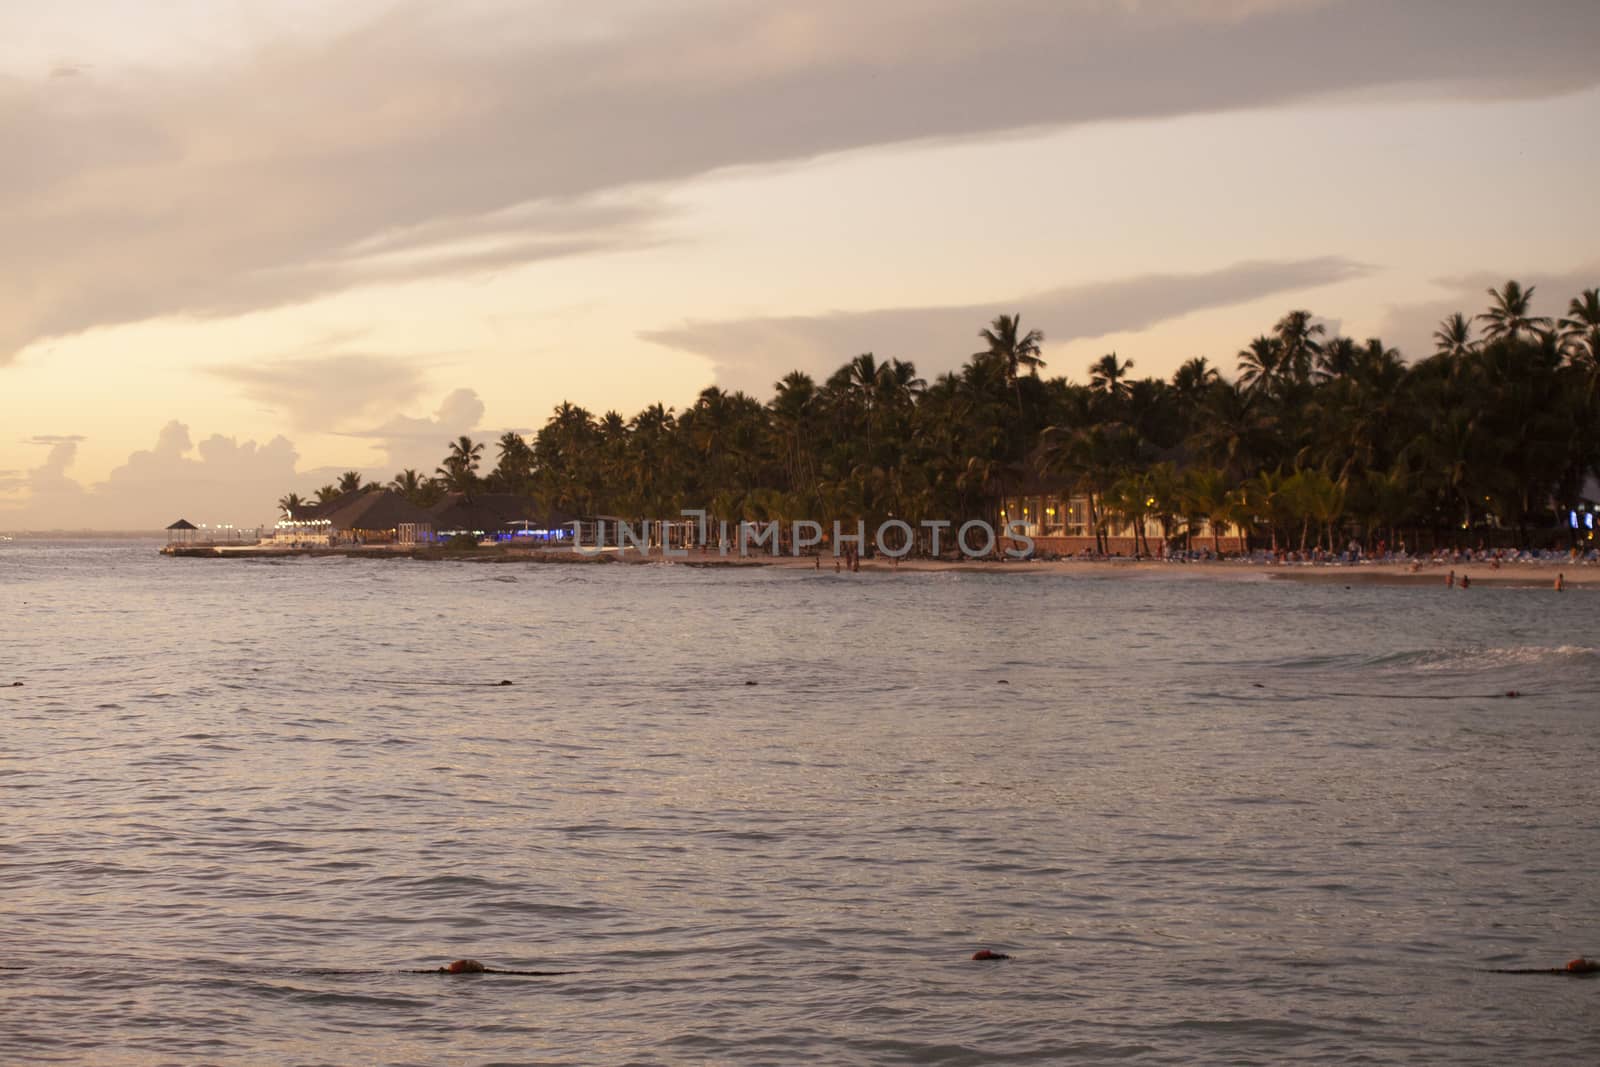 Dominicus Shoreline at sunset in Dominican Republic